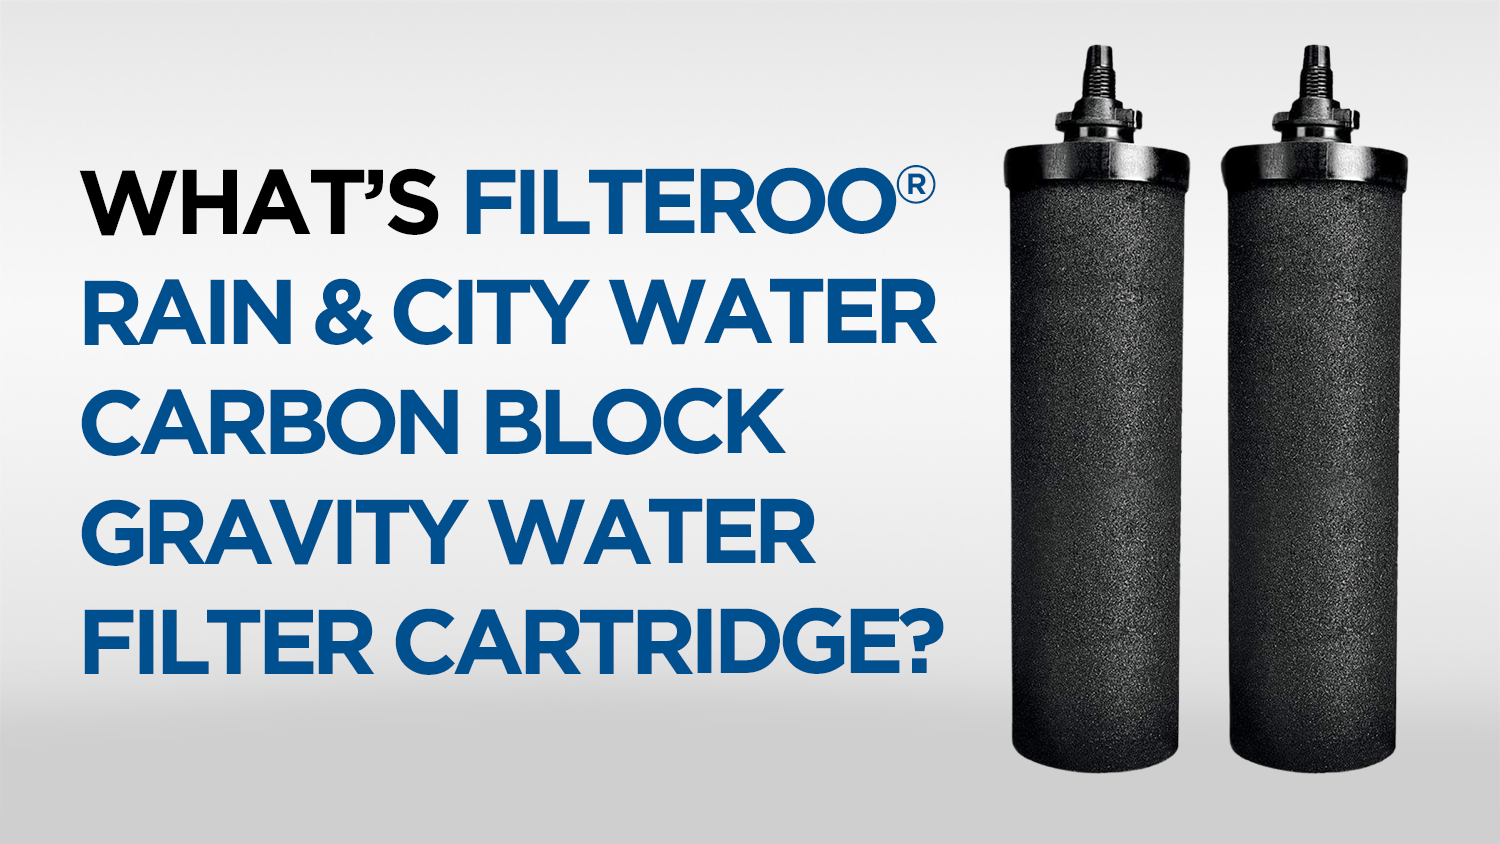 What's Filteroo® Rain & City Water Carbon Block Gravity Water Filter Cartridge?